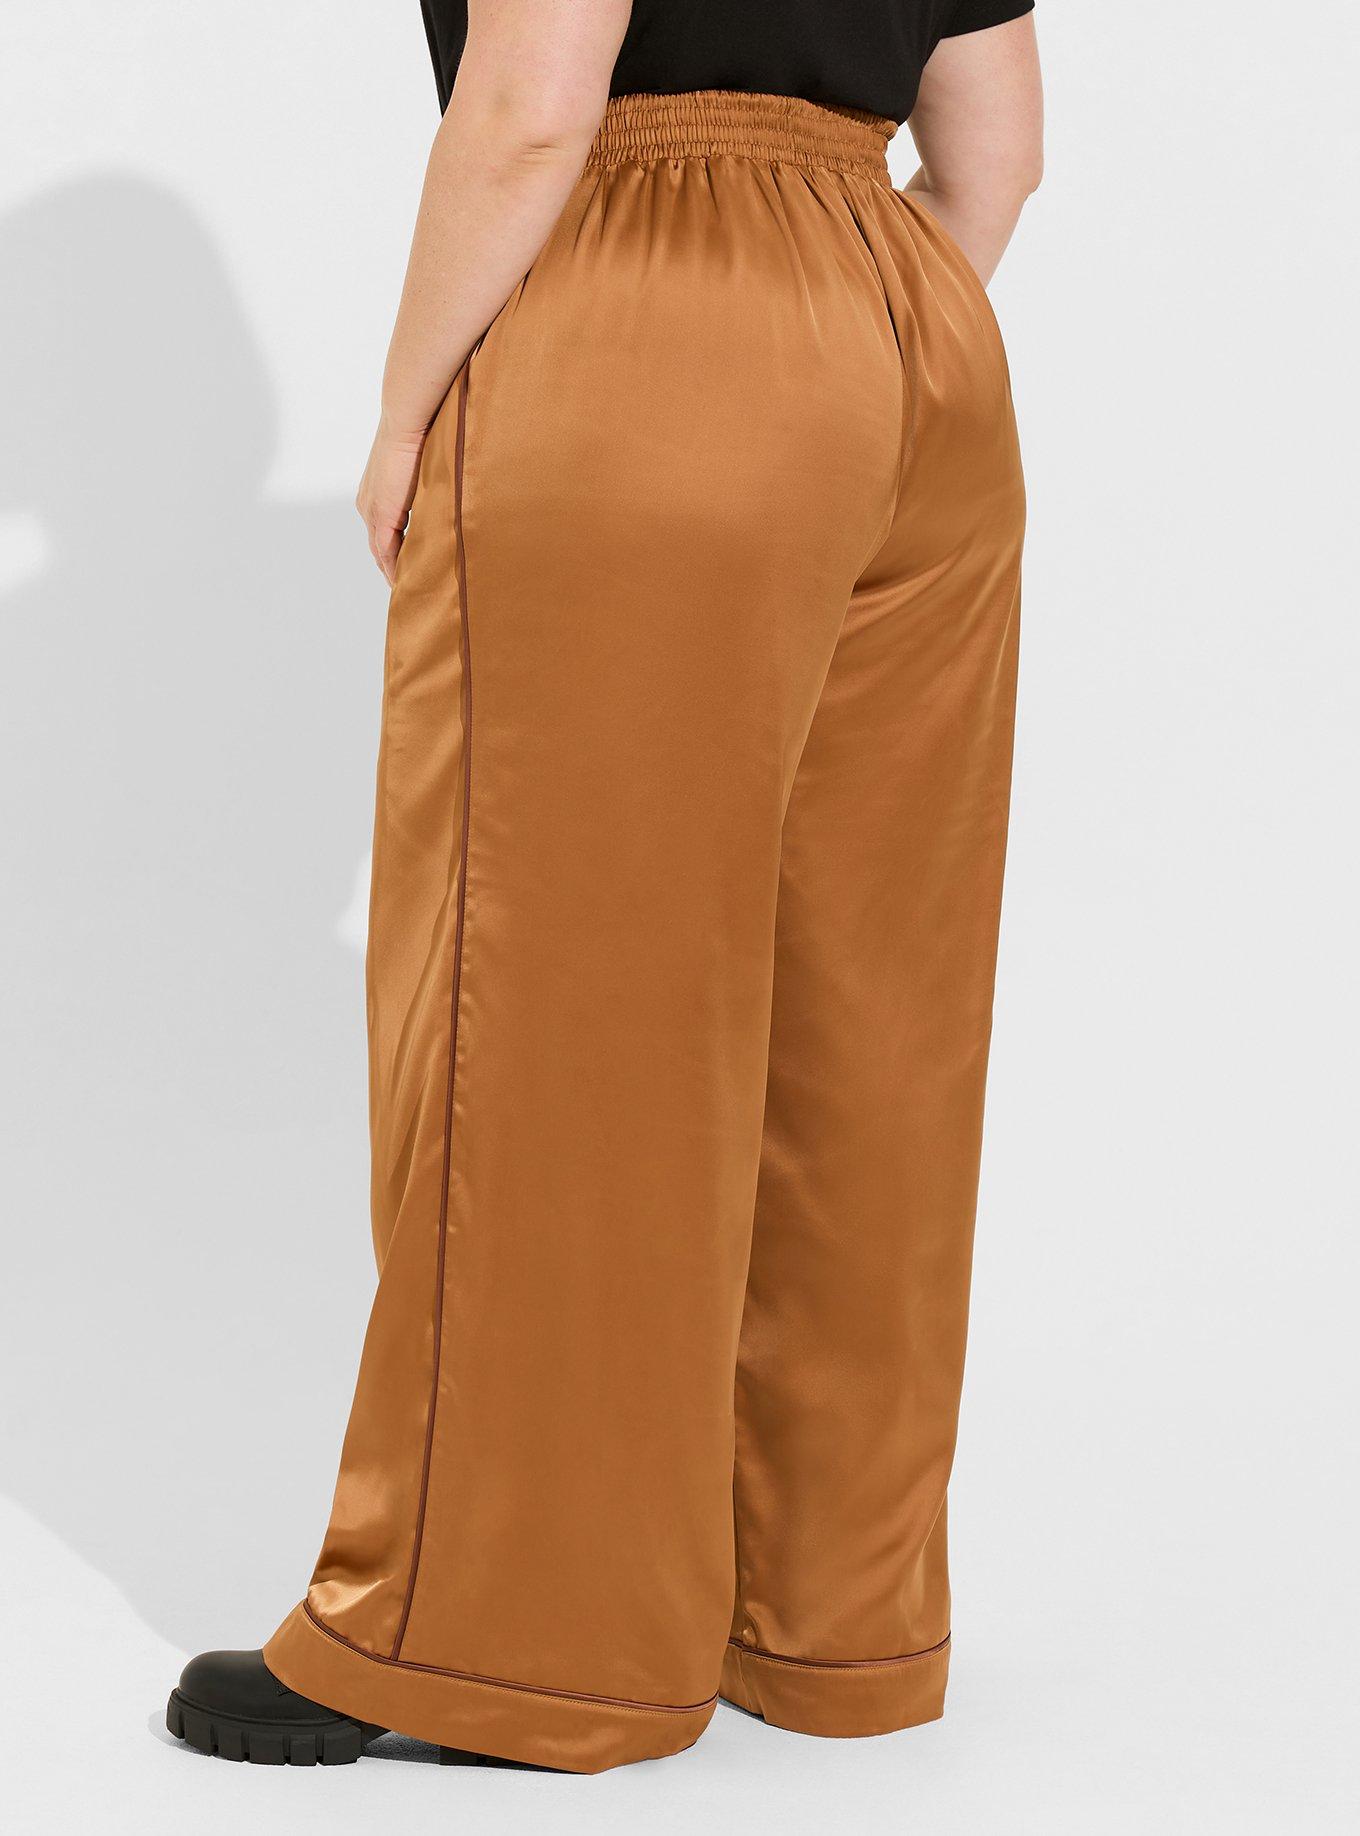 Big Saving Little Time,POROPL Plus Size Casual Solid Pockets Buttons  Elastic Waist Comfortable Straight Pants Woman Capri Pants Clearance Orange  Size